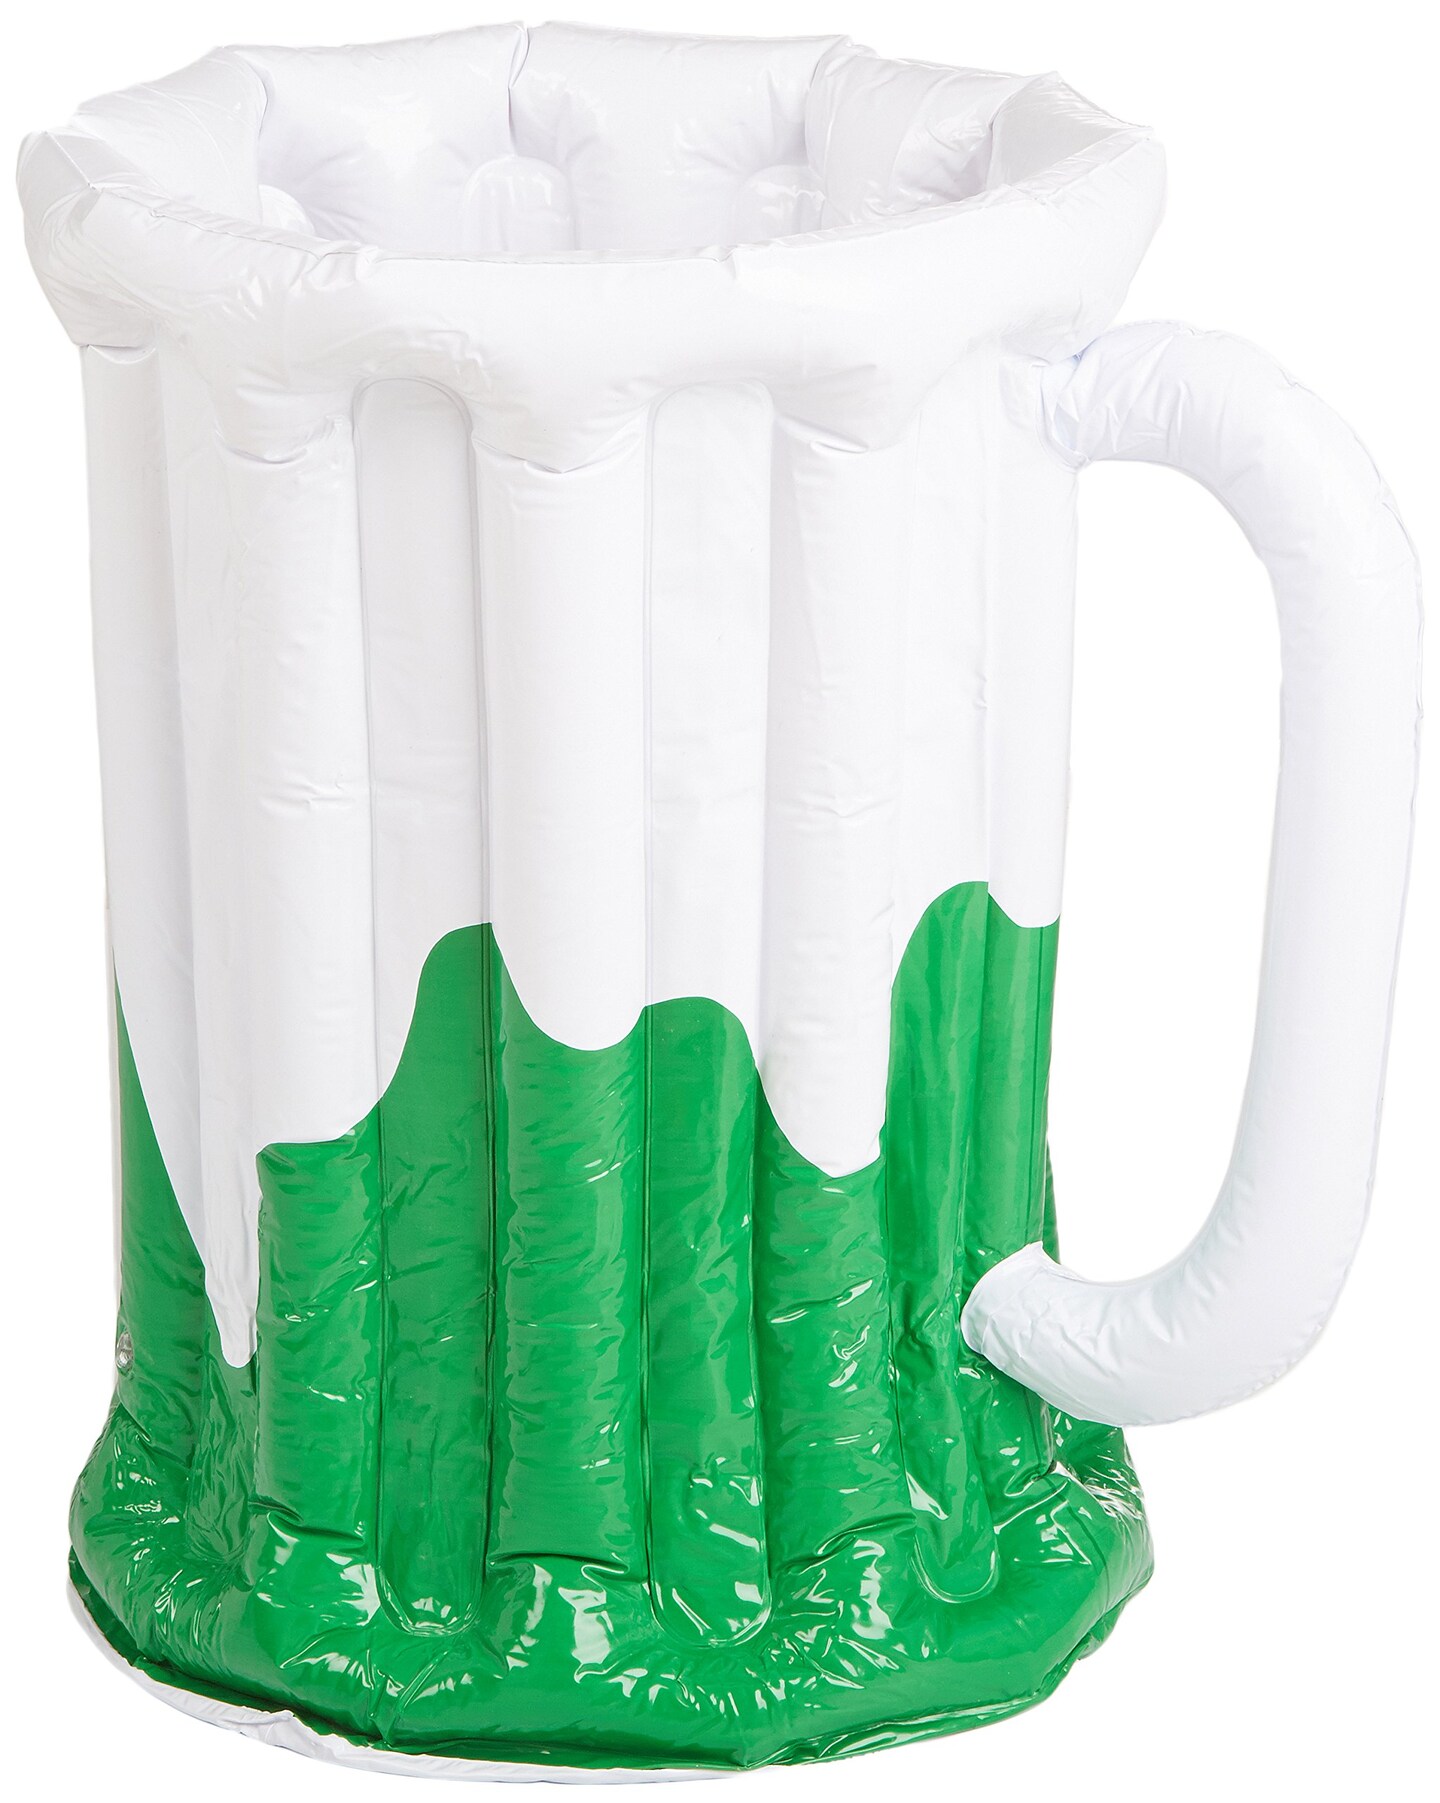 Inflatable Beer Mug Cooler (Pack of 6)